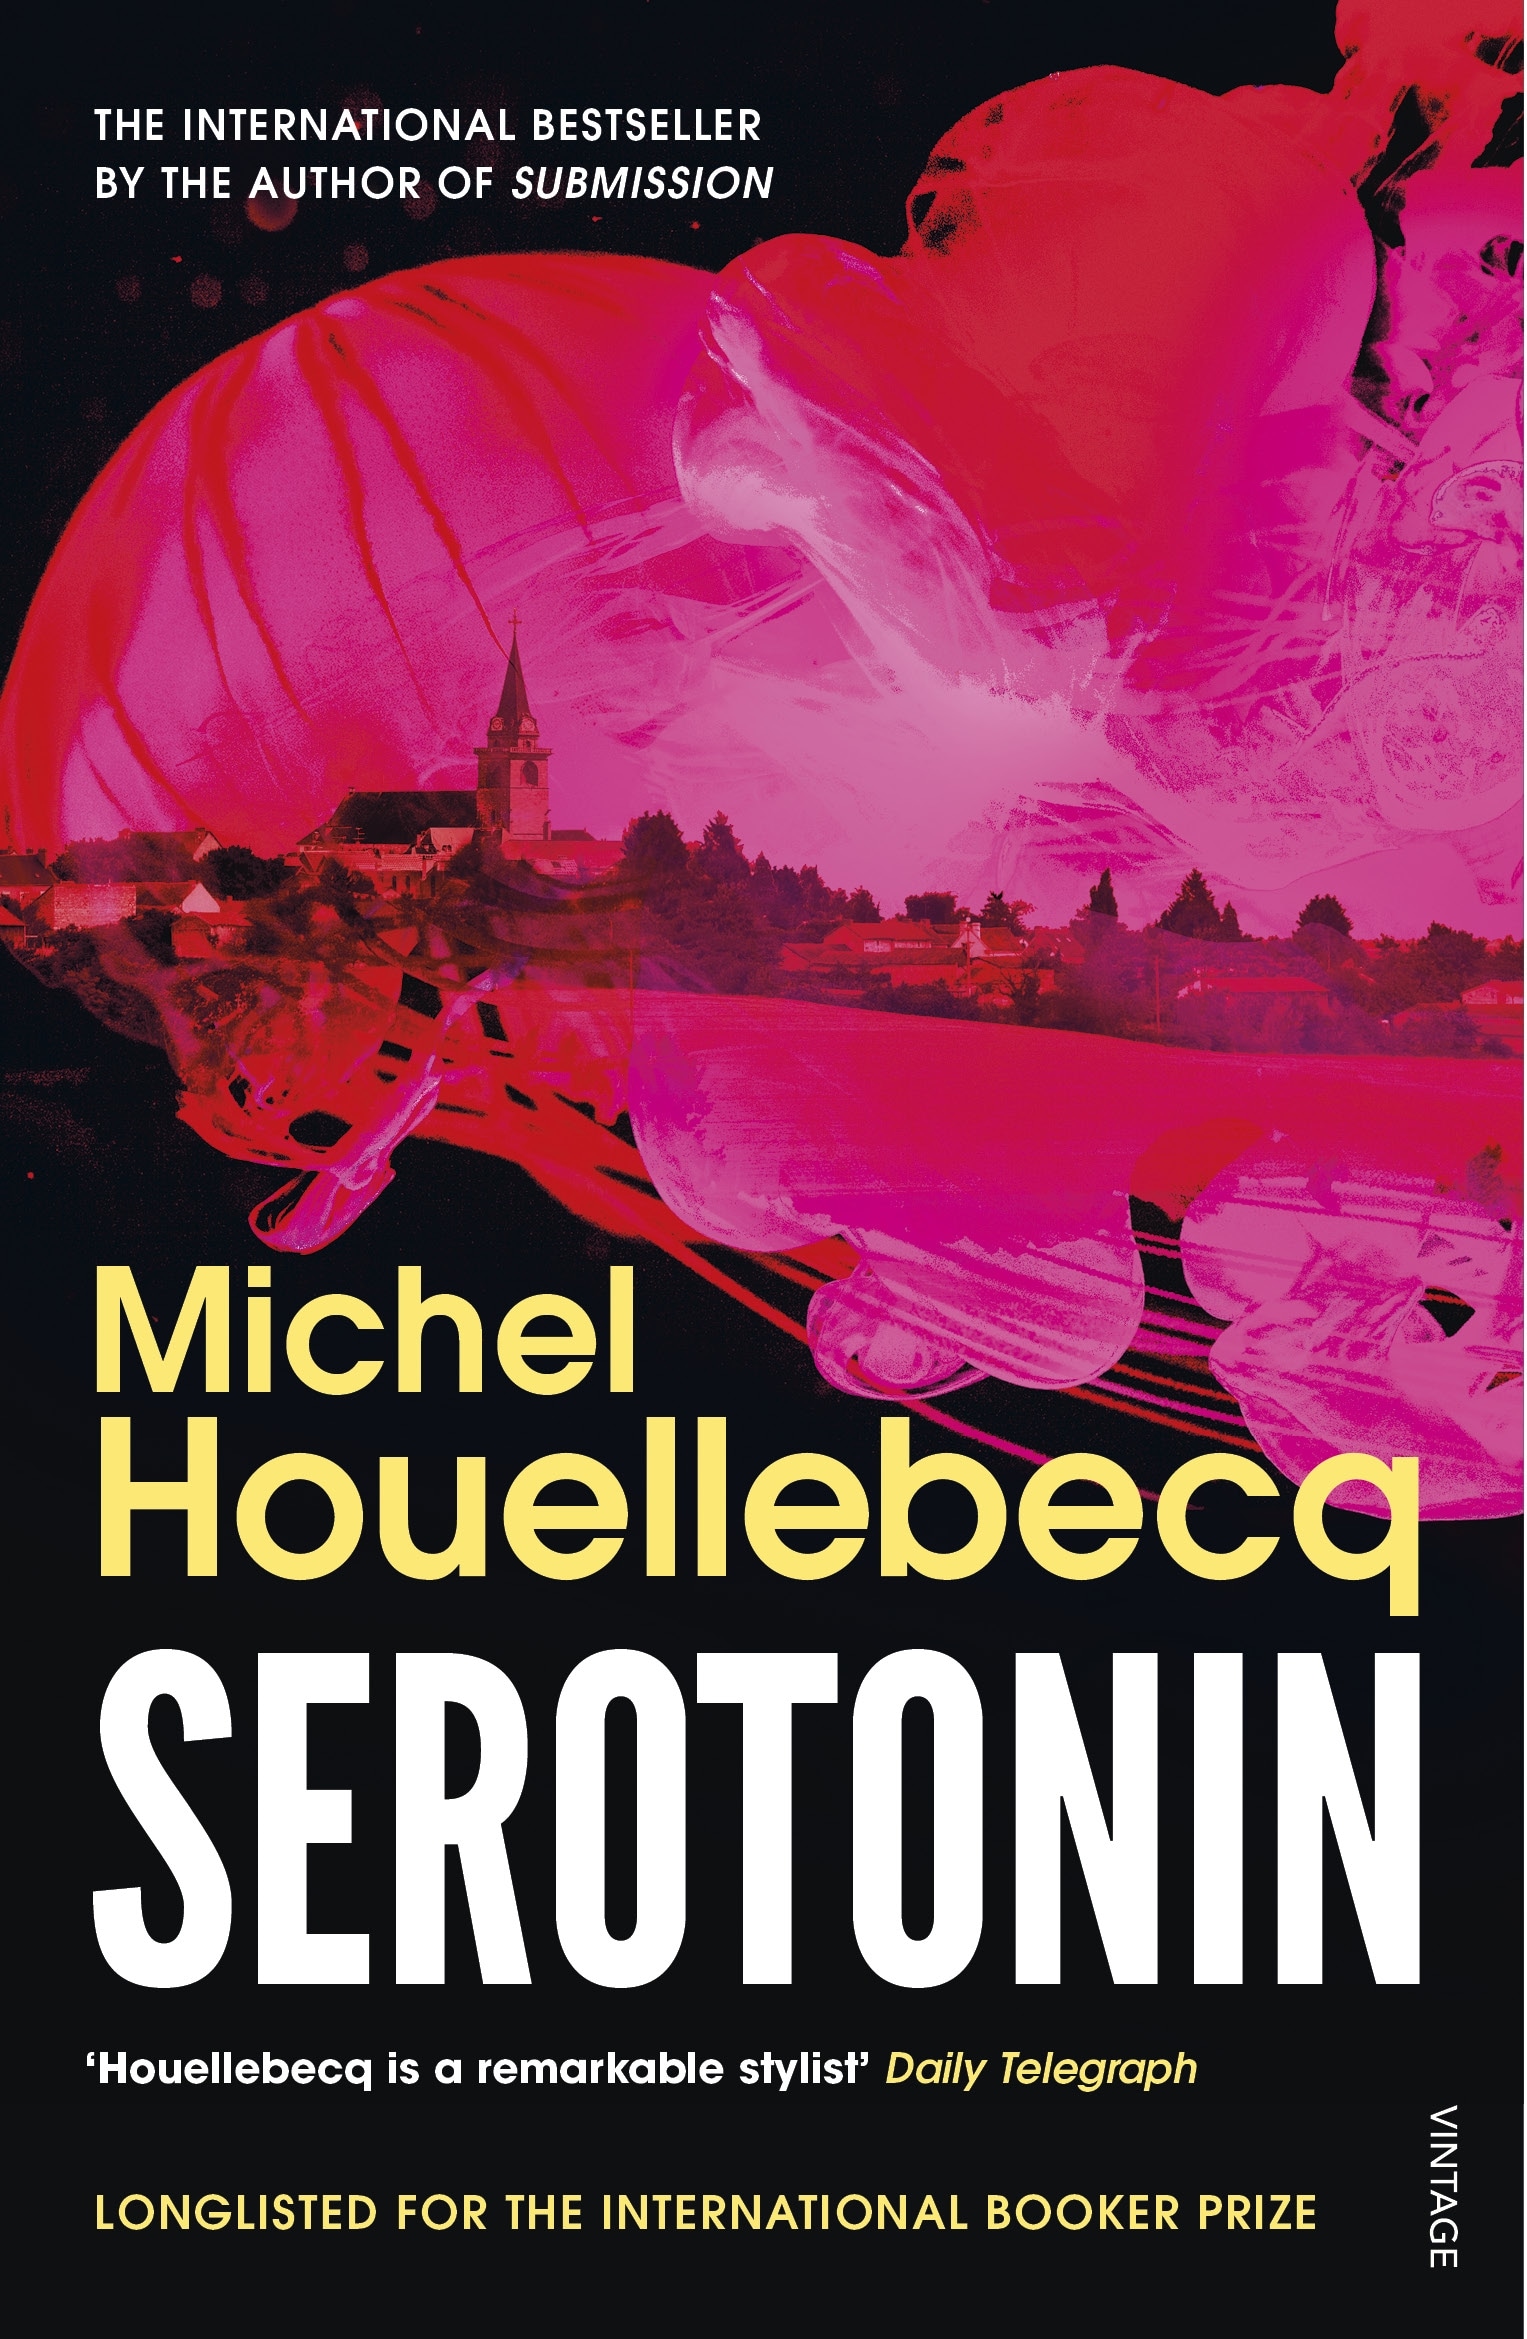 Book “Serotonin” by Michel Houellebecq — September 17, 2020